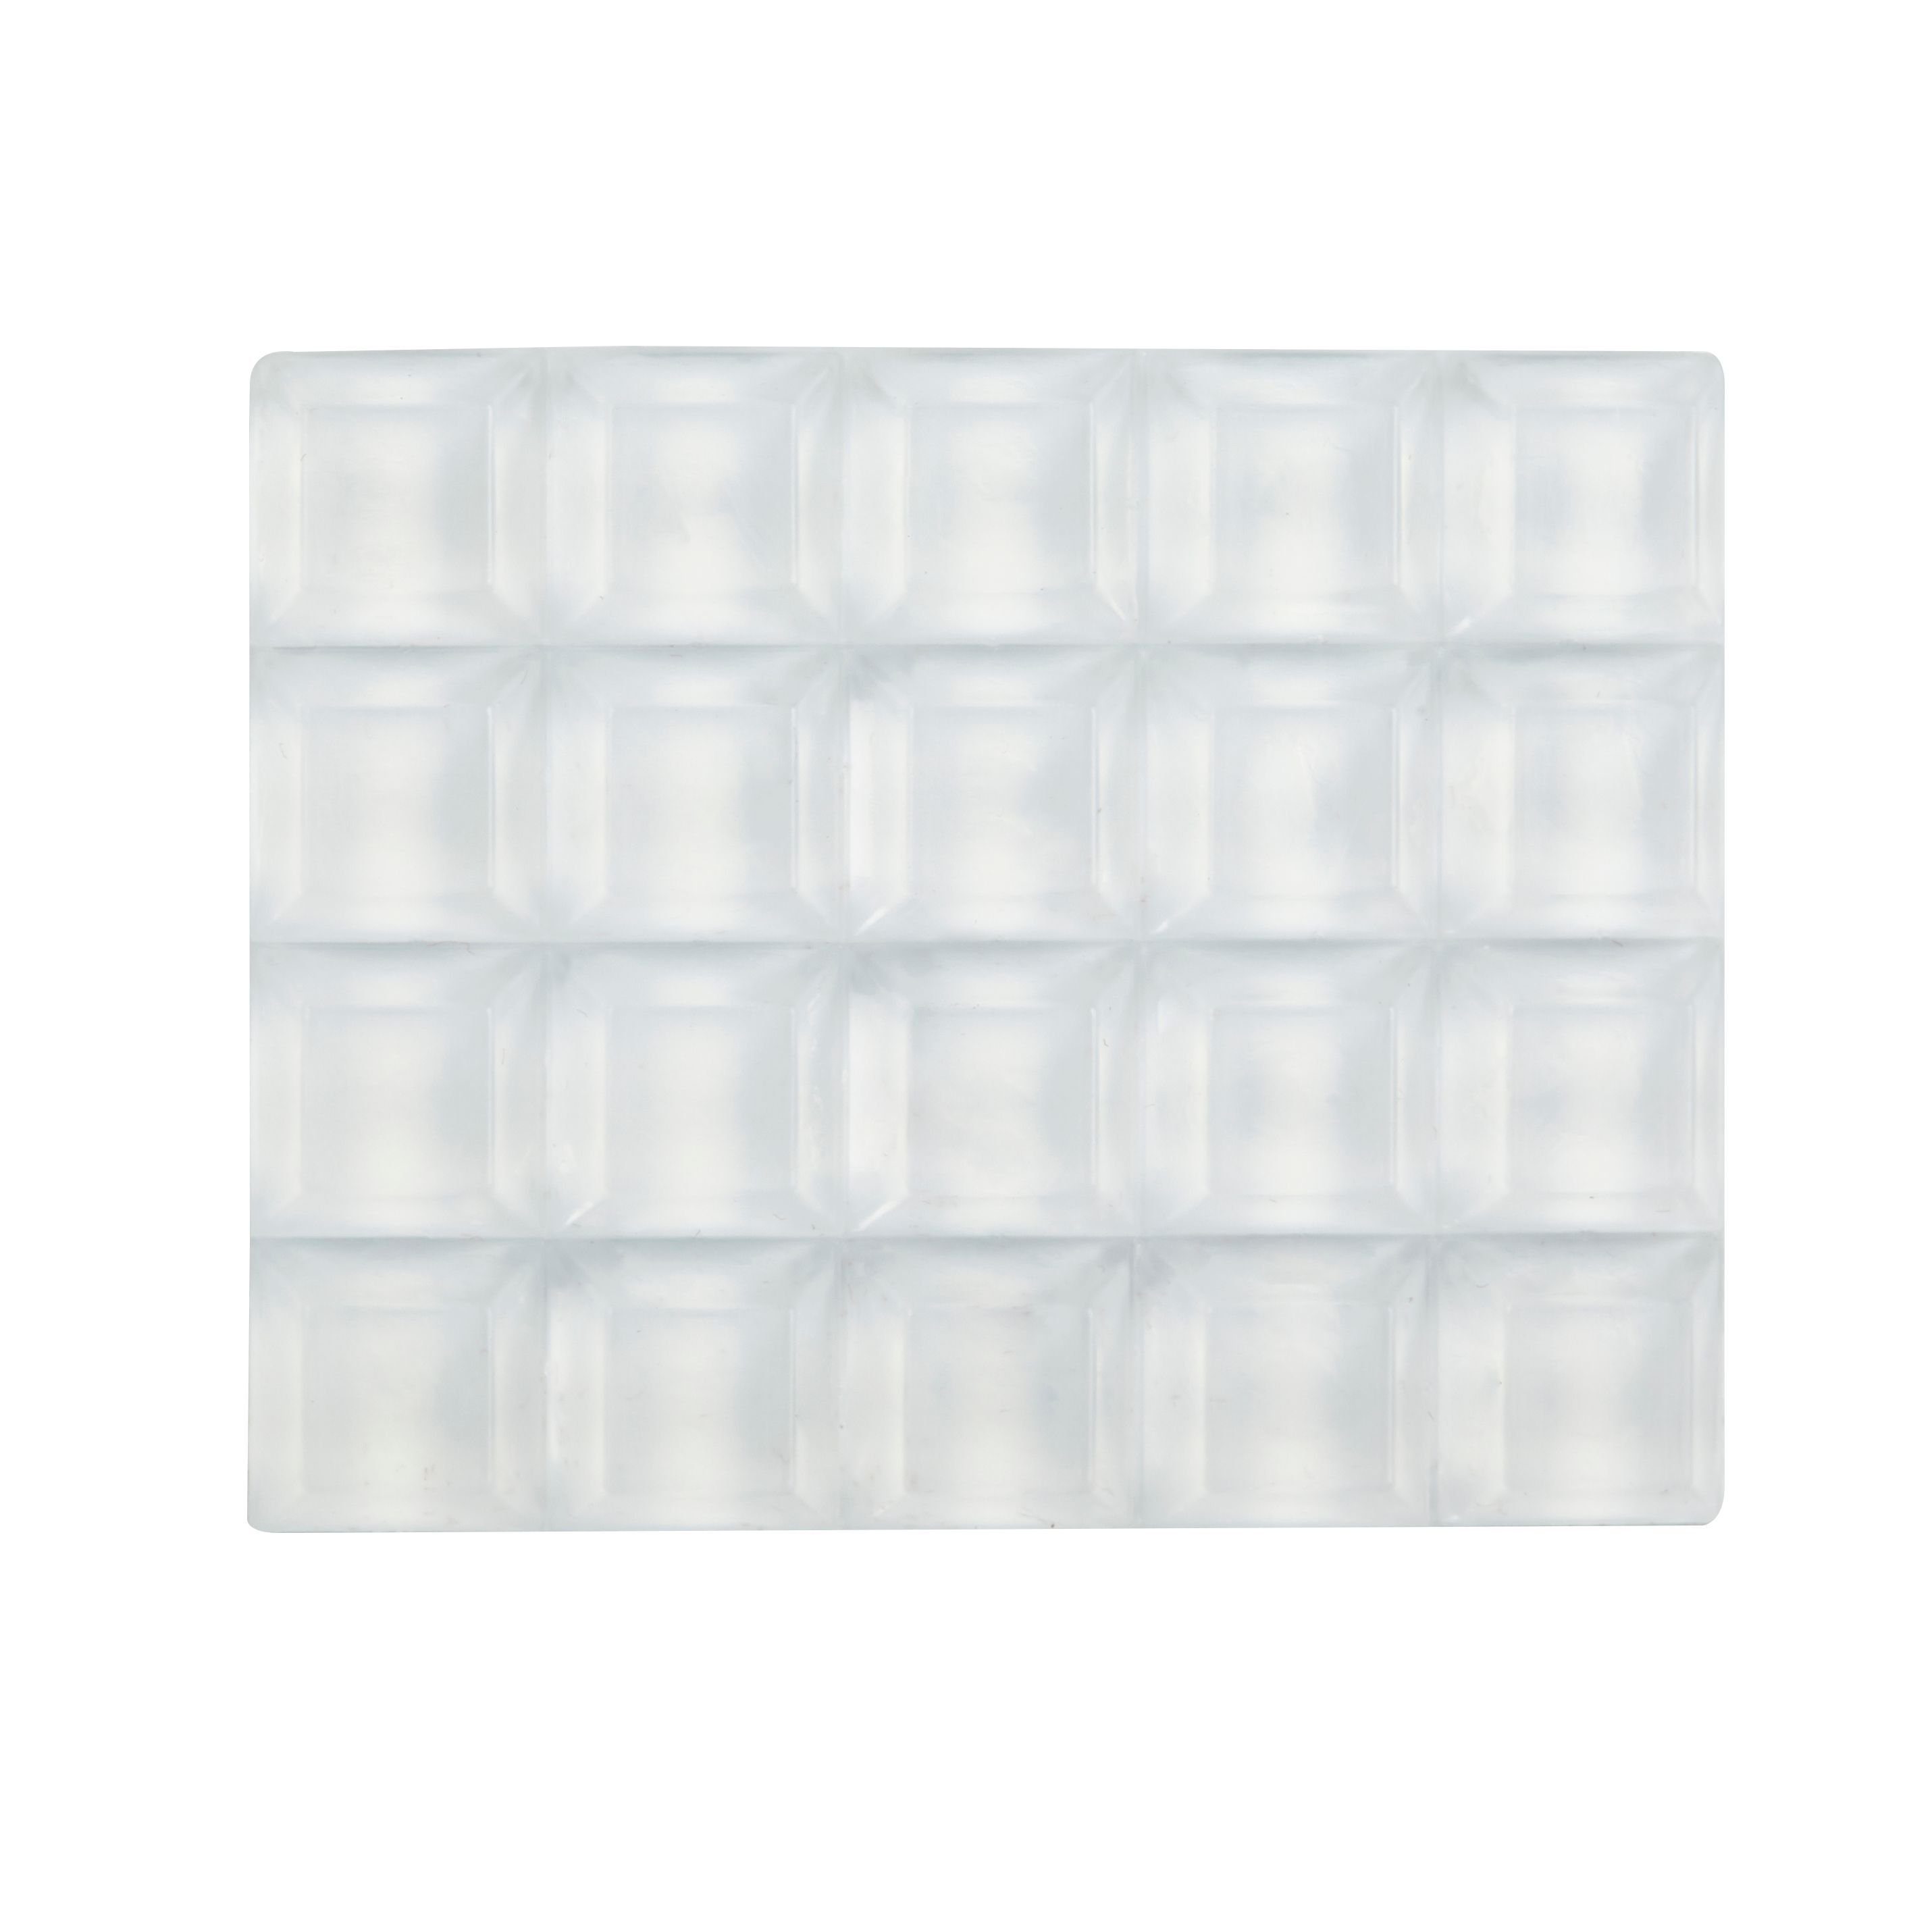 Transparent Polyvinyl chloride (PVC) Bumper+ (L)13mm (W)13mm, Pack of 20